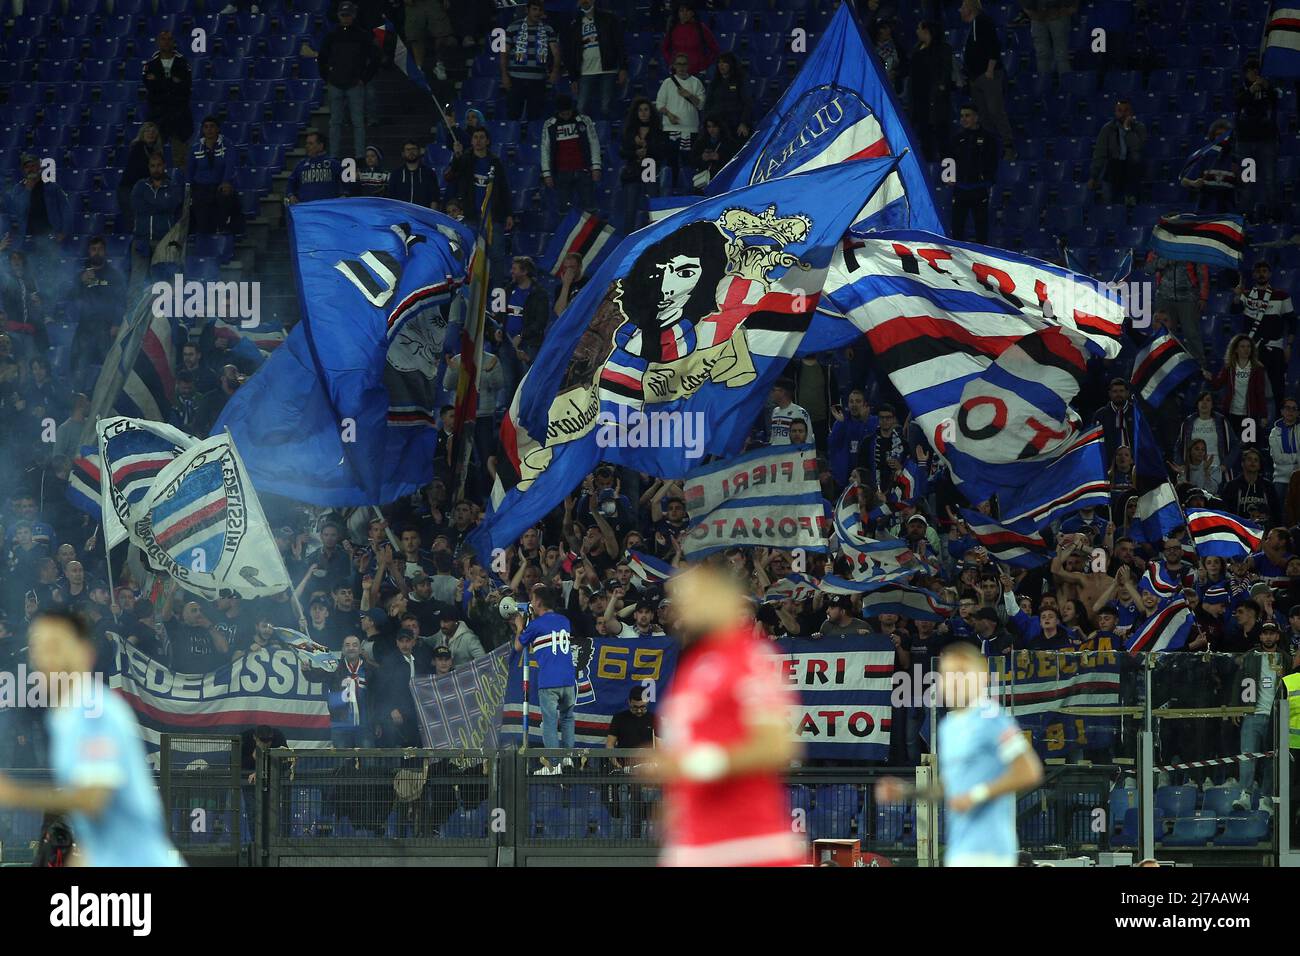 UC Sampdoria vs Genoa FC editorial stock image. Image of fans - 191404714